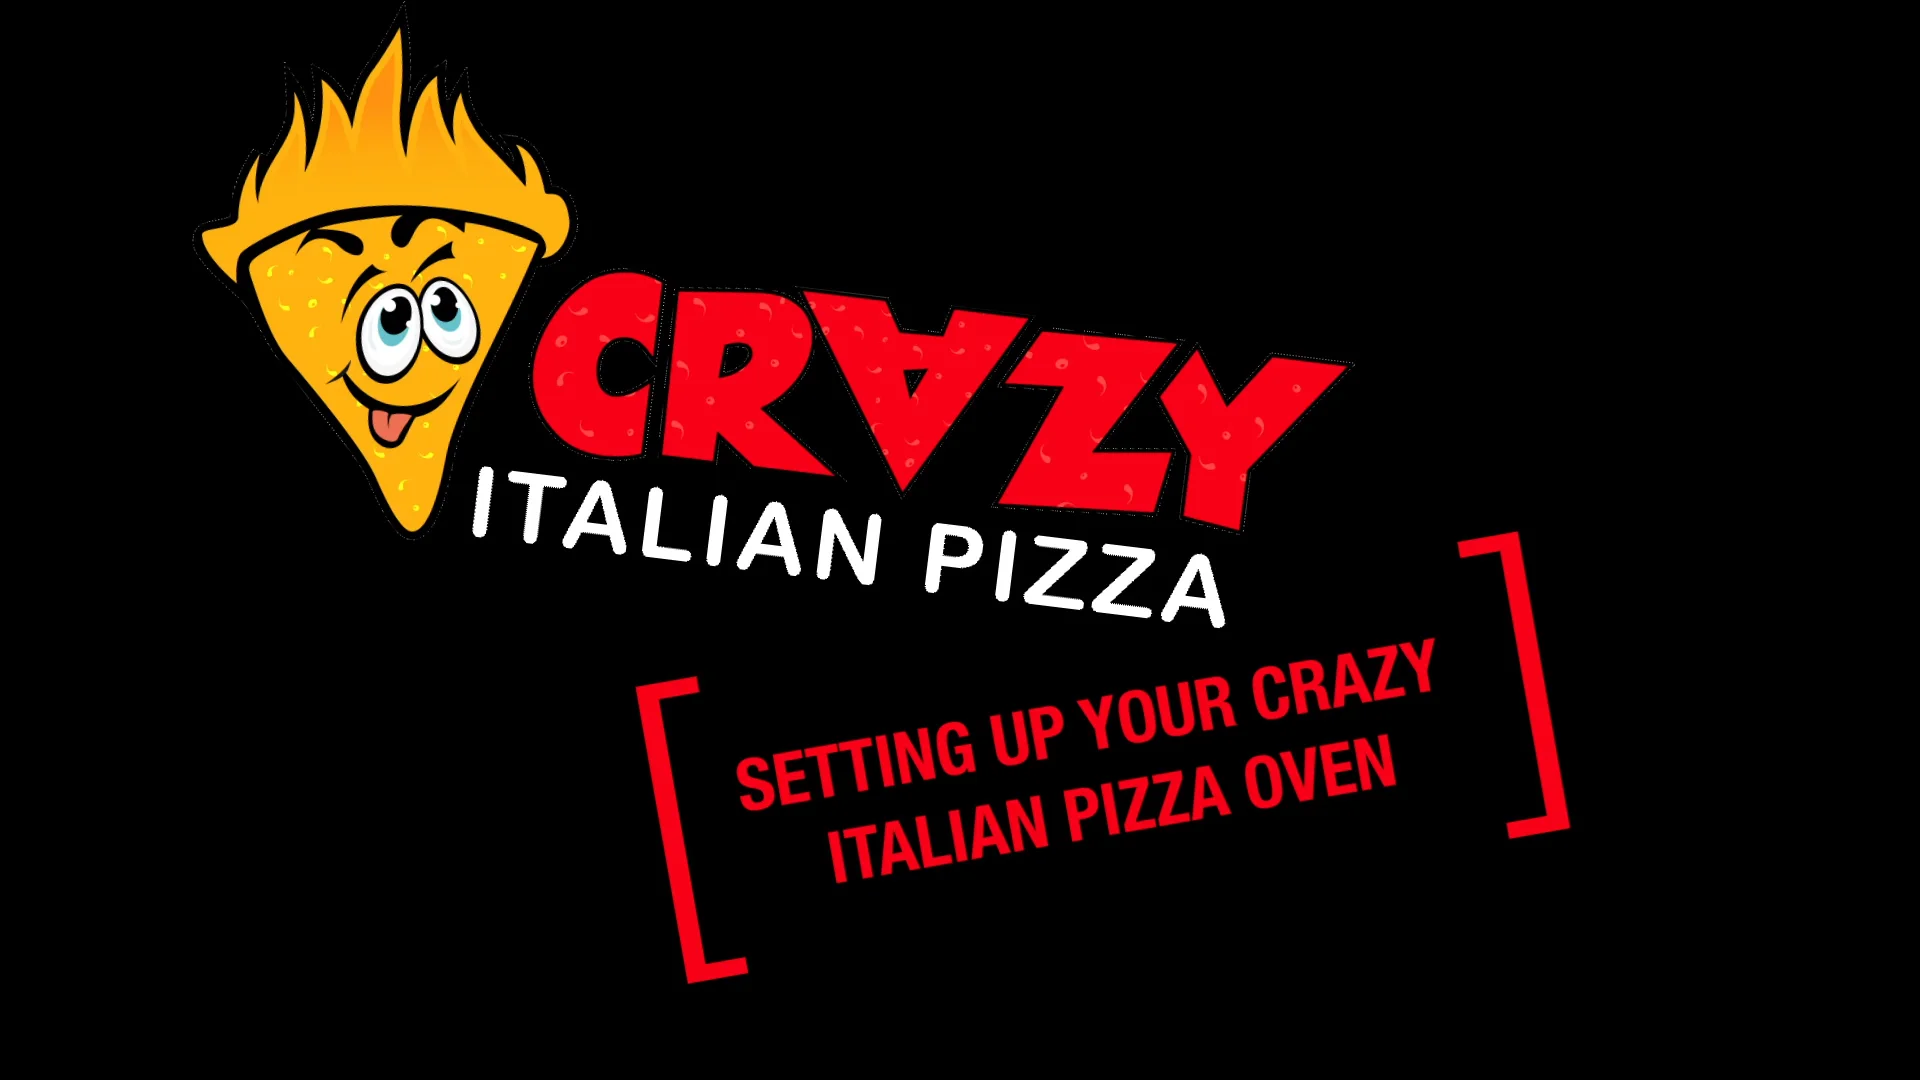 WINGS  Crazy Italian Pizza, Inc